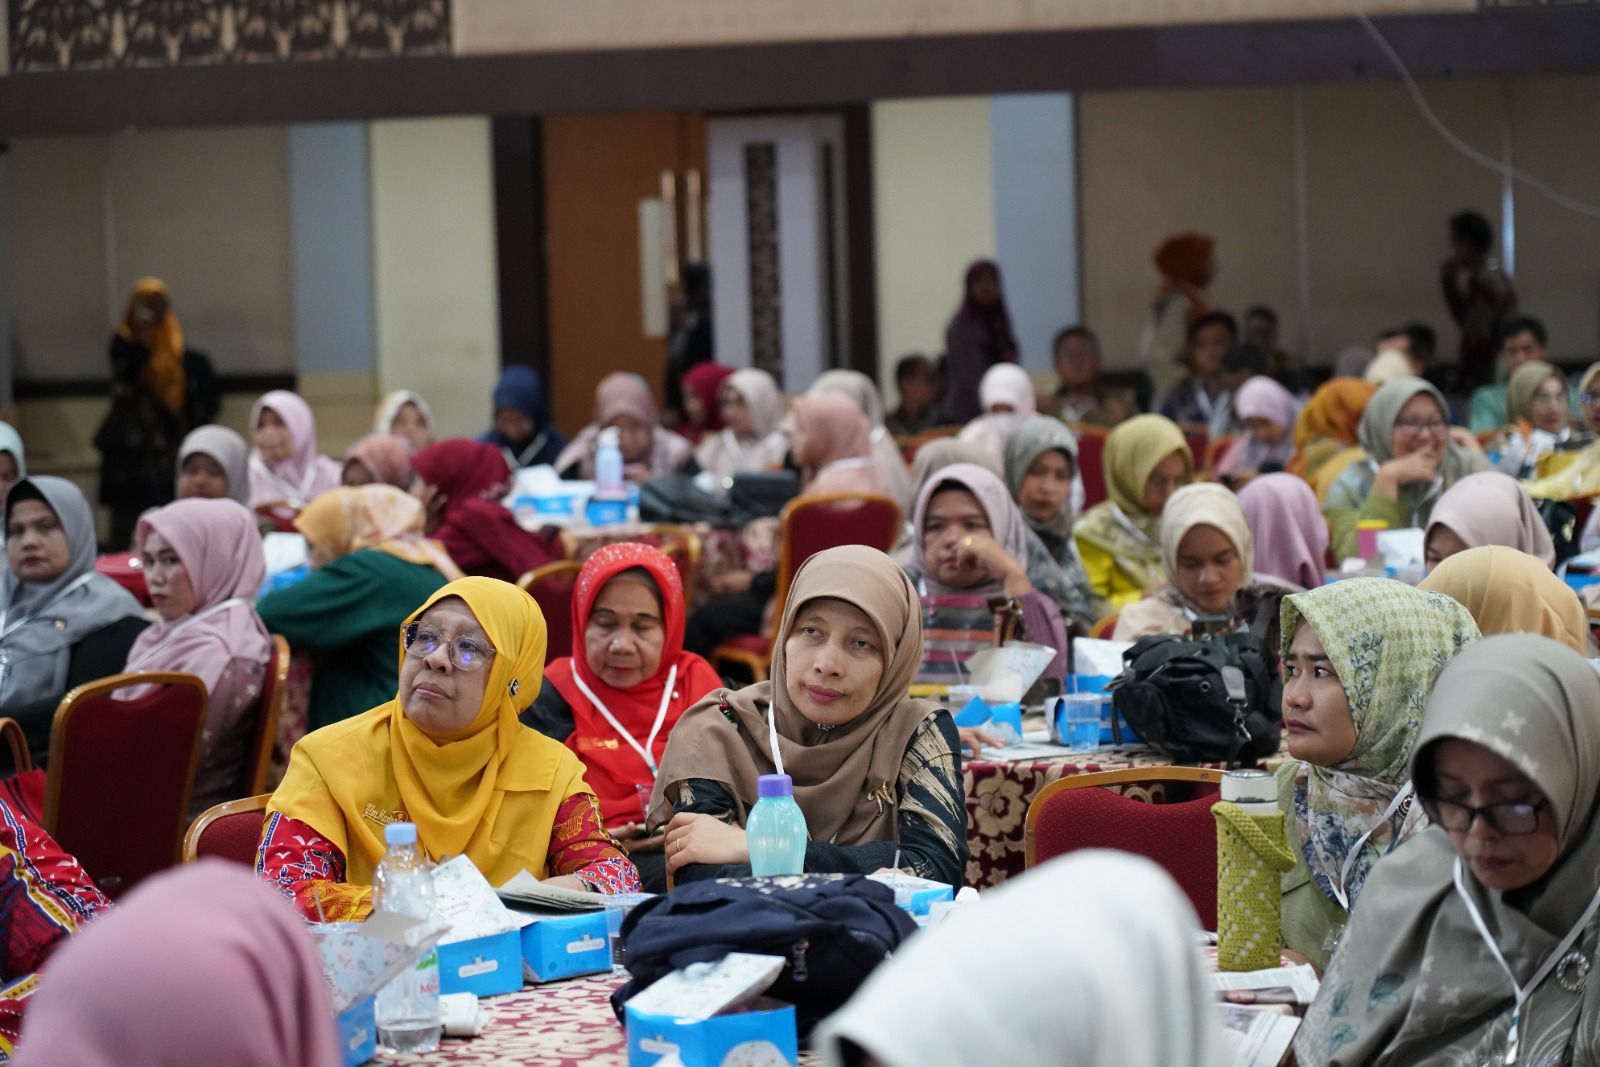 Elnusa Petrofin Berpartisipasi dalam Workshop Literasi dan Pelatihan Jurnalistik di Sumatera Barat